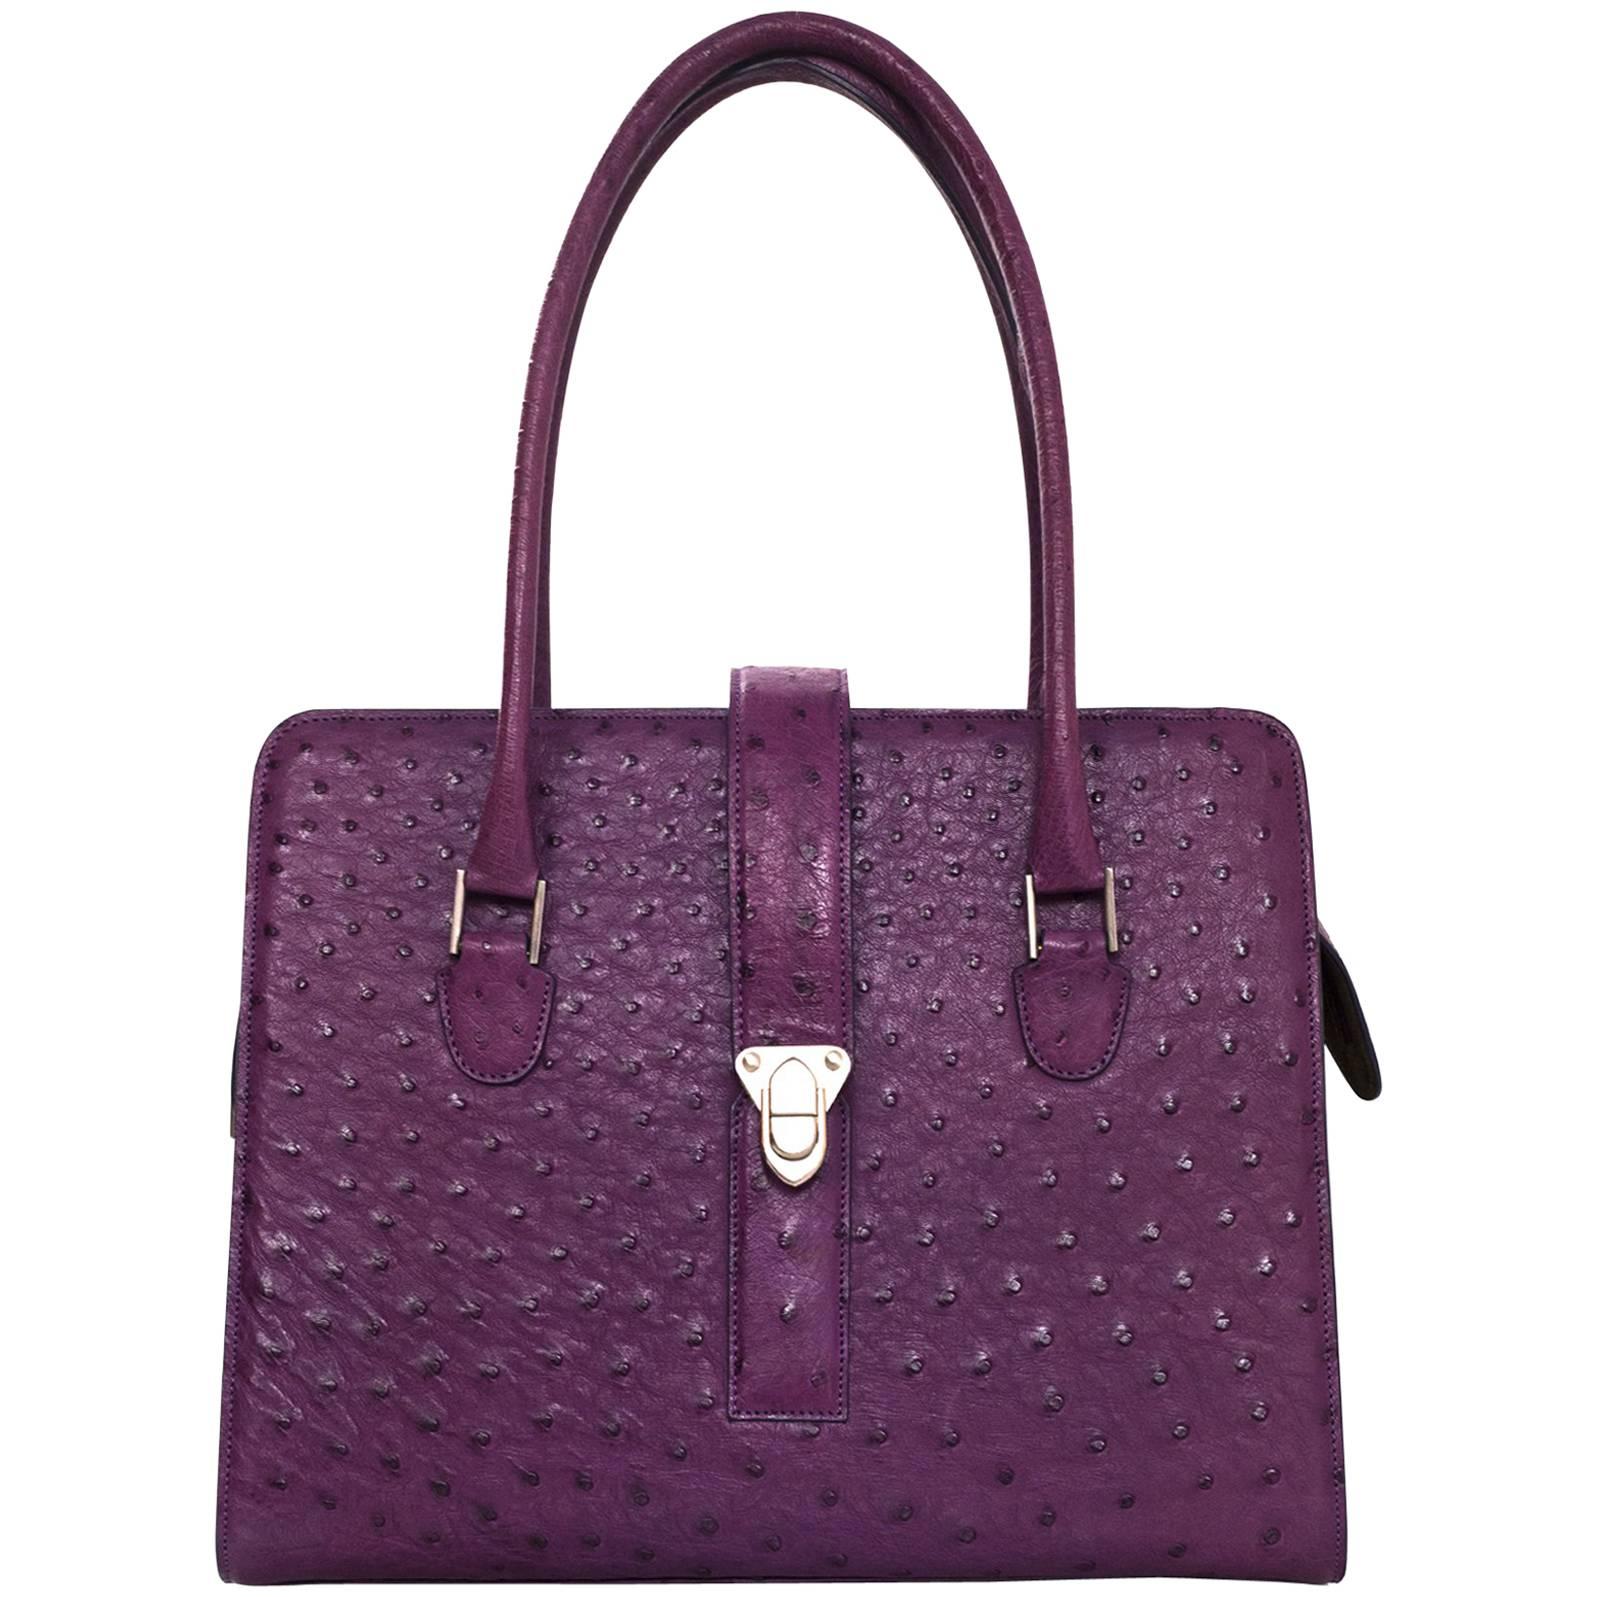 Manolo Blahnik Purple Ostrich Tote Bag with DB